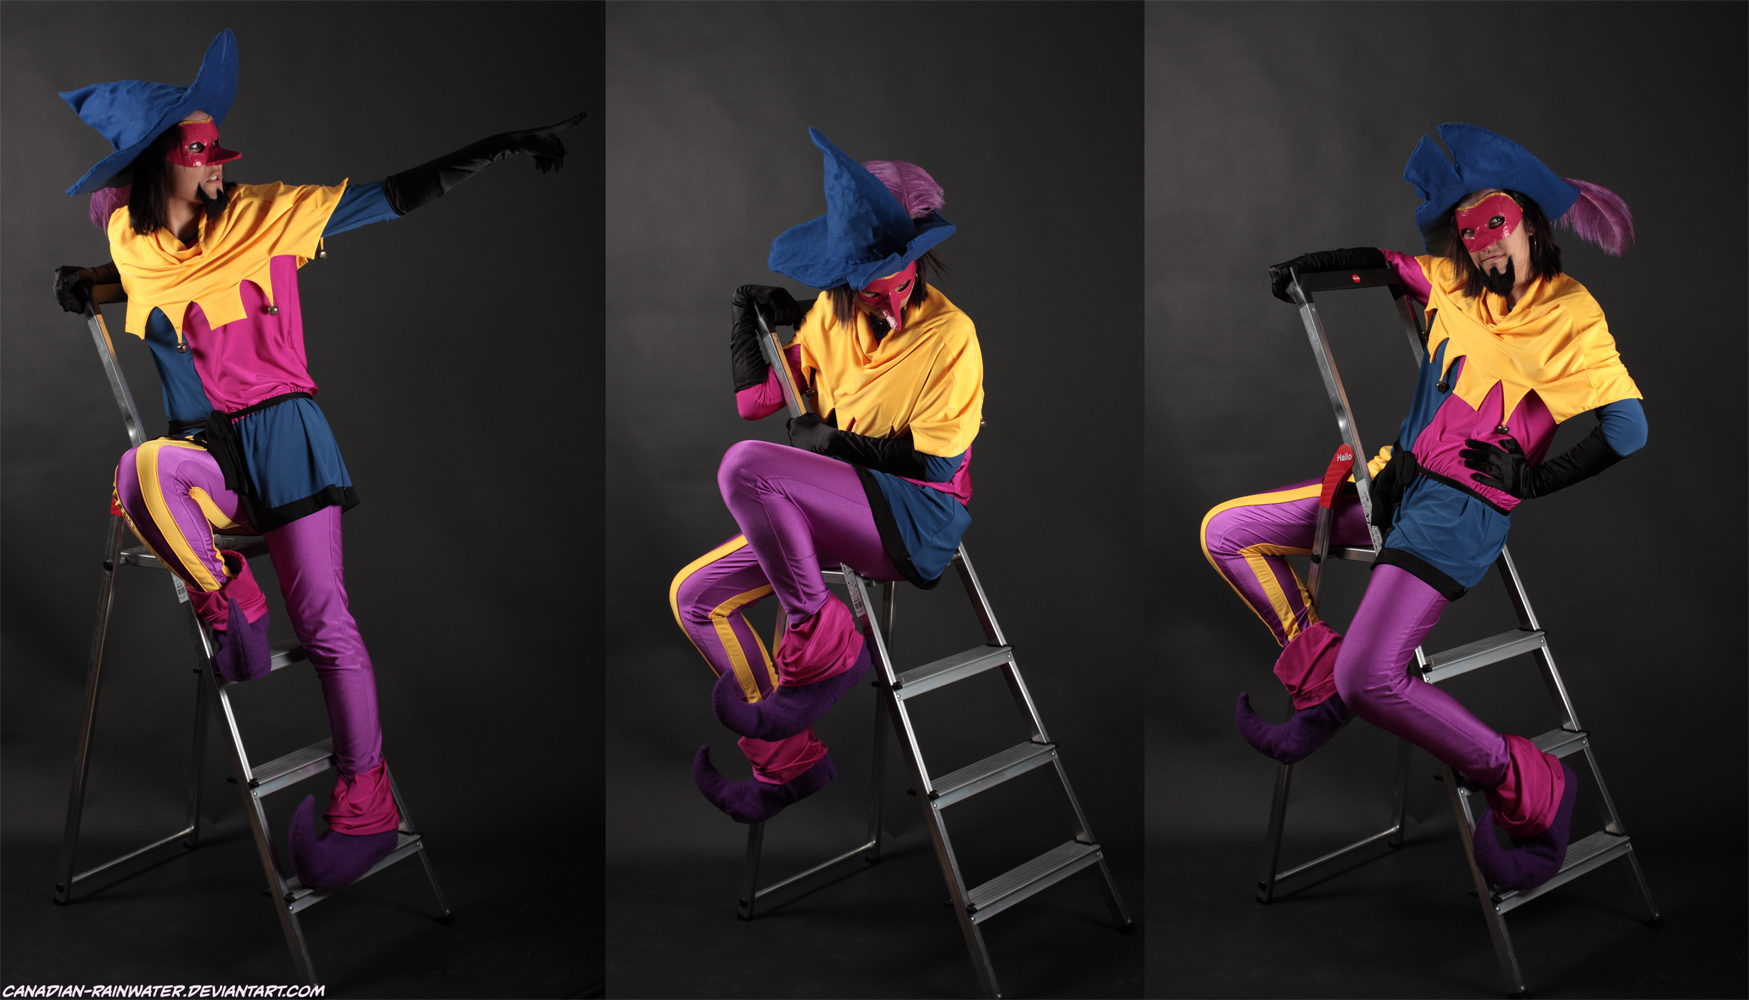 Photoshoot - Ladders